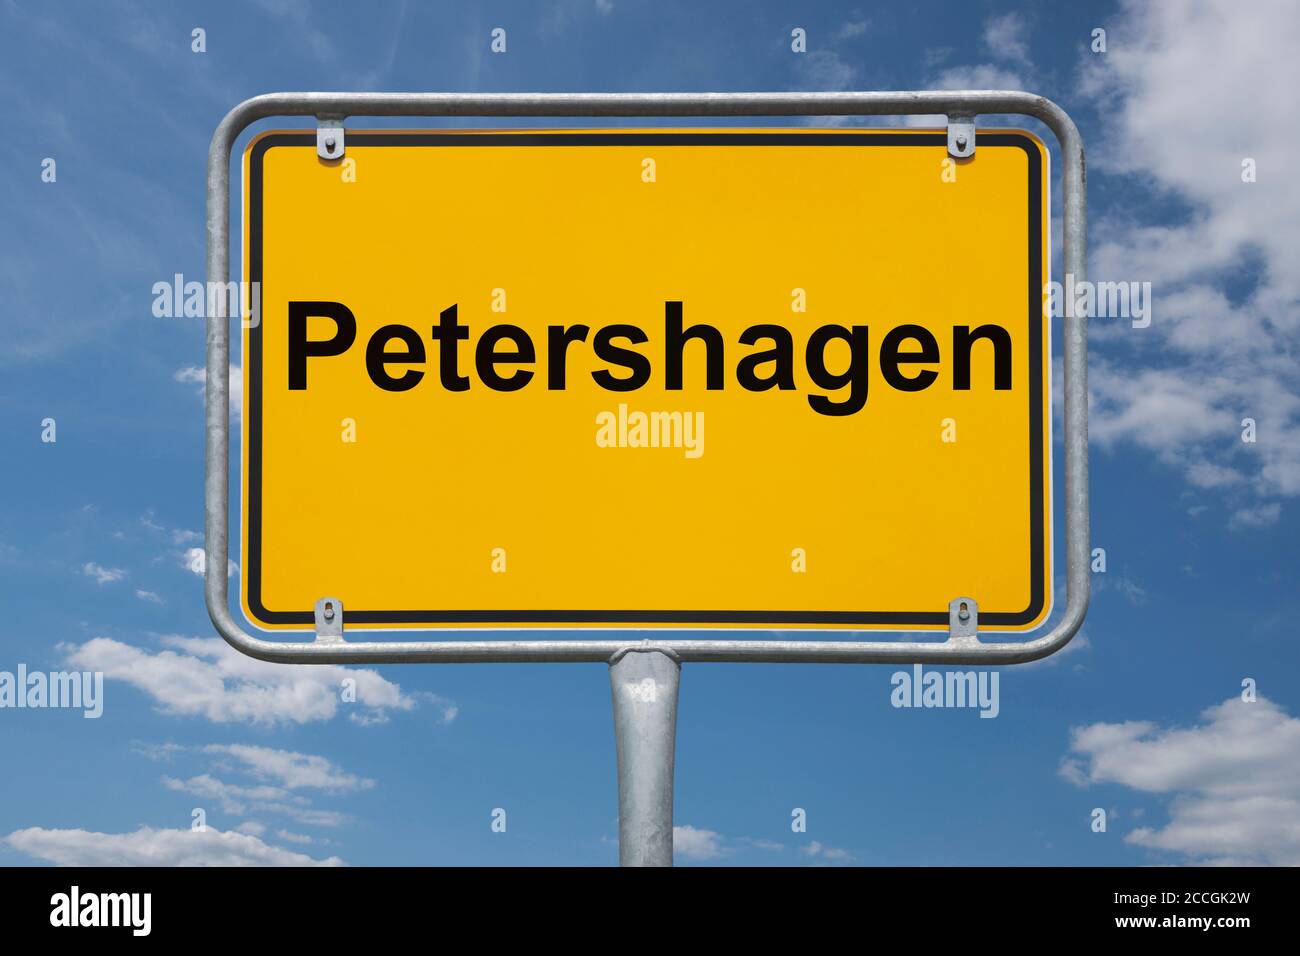 Ortstafel Petershagen, Nordrhein-Westfalen, Deutschland | panneau de nom de lieu Petershagen, Rhénanie-du-Nord-Westphalie, Allemagne, Europe Banque D'Images